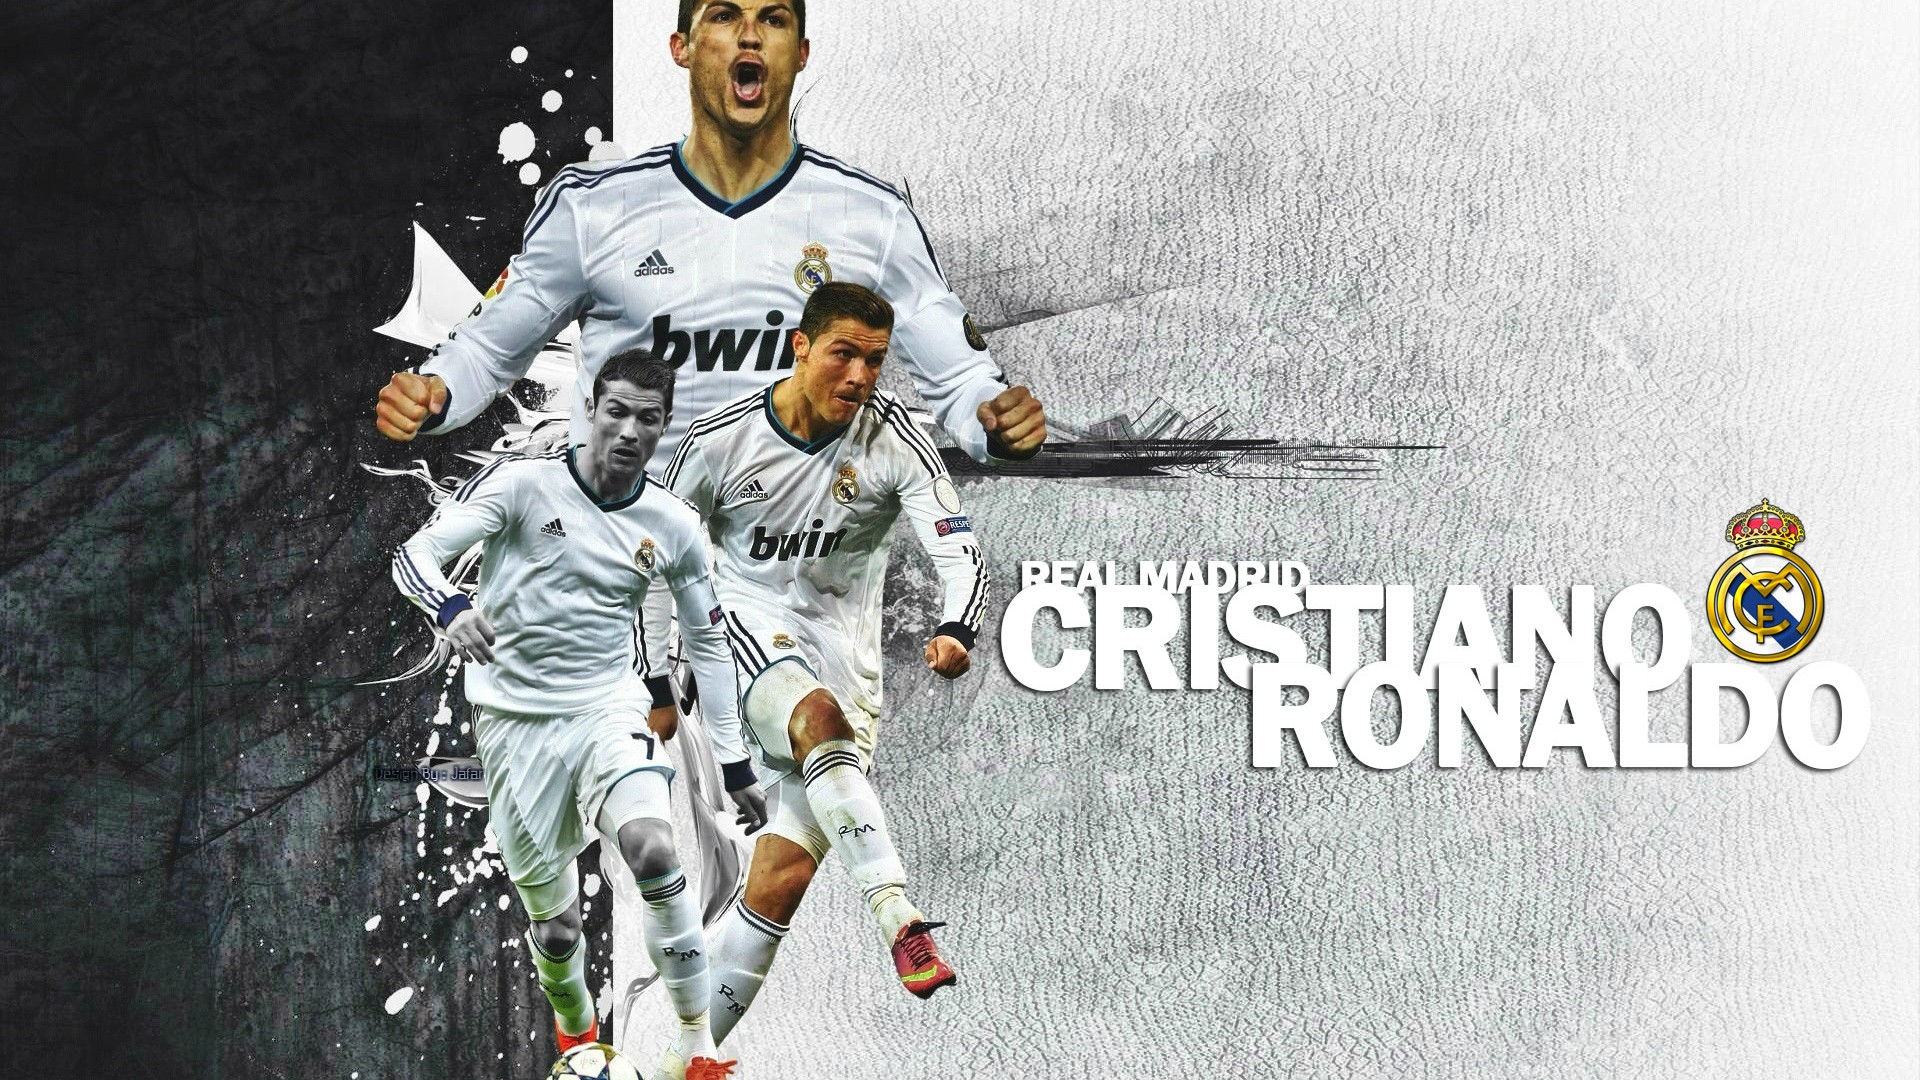 Cristiano Ronaldo by Jafar wallpaper - Cristiano Ronaldo Wallpapers